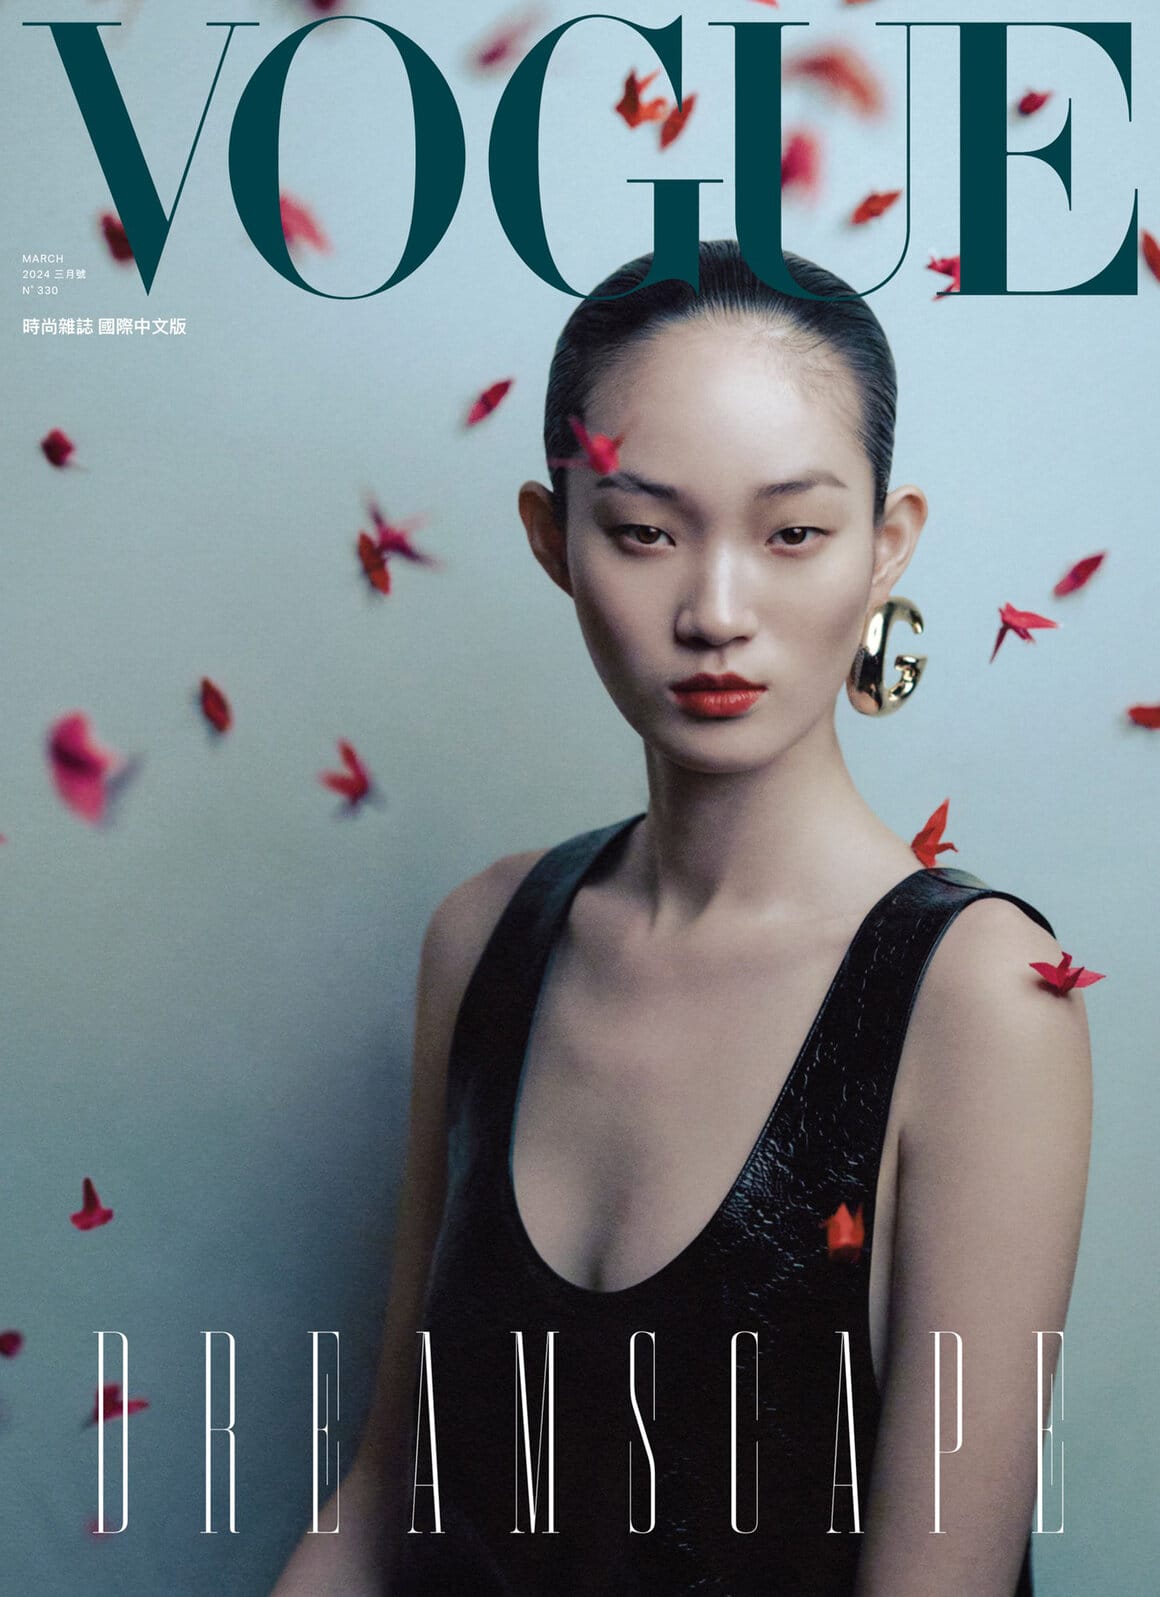 Photographie du mannequin Hyunji Shin pour le magazine vogue par Cho Gi-Seok